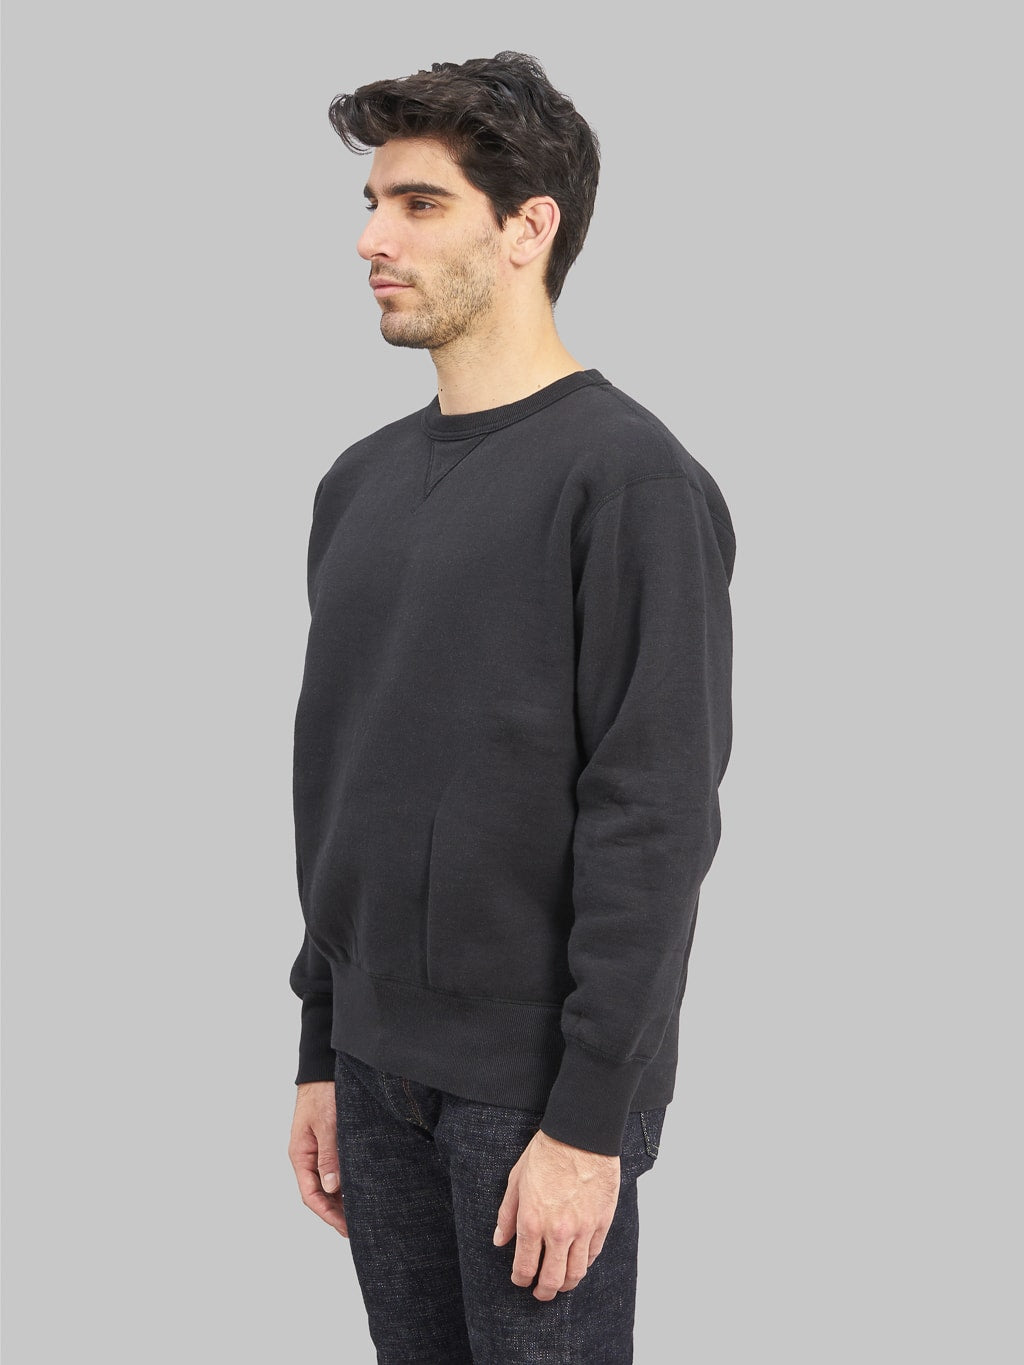 The Strike Gold Loopwheeled Sweatshirt black model side fit